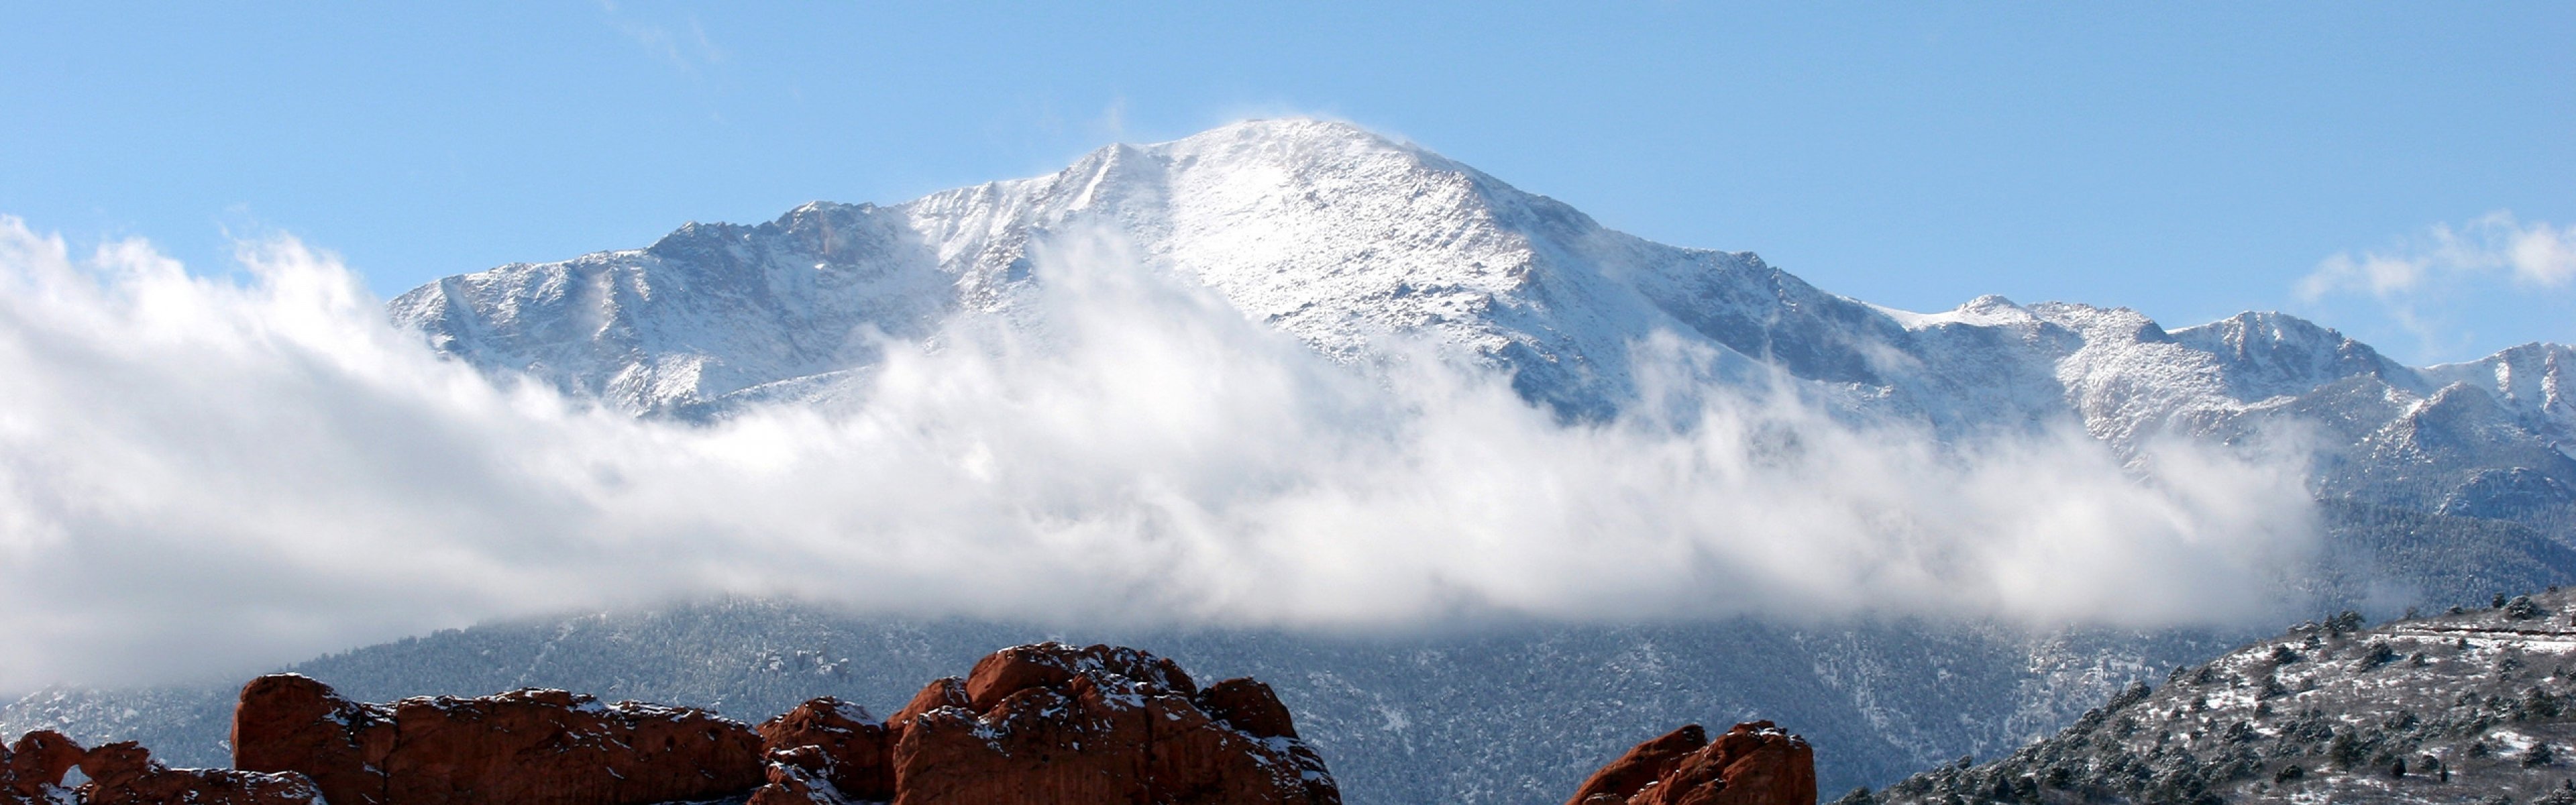 mountains, Landscape, Nature, Mountain, Winter, Snow, Clouds Wallpaper